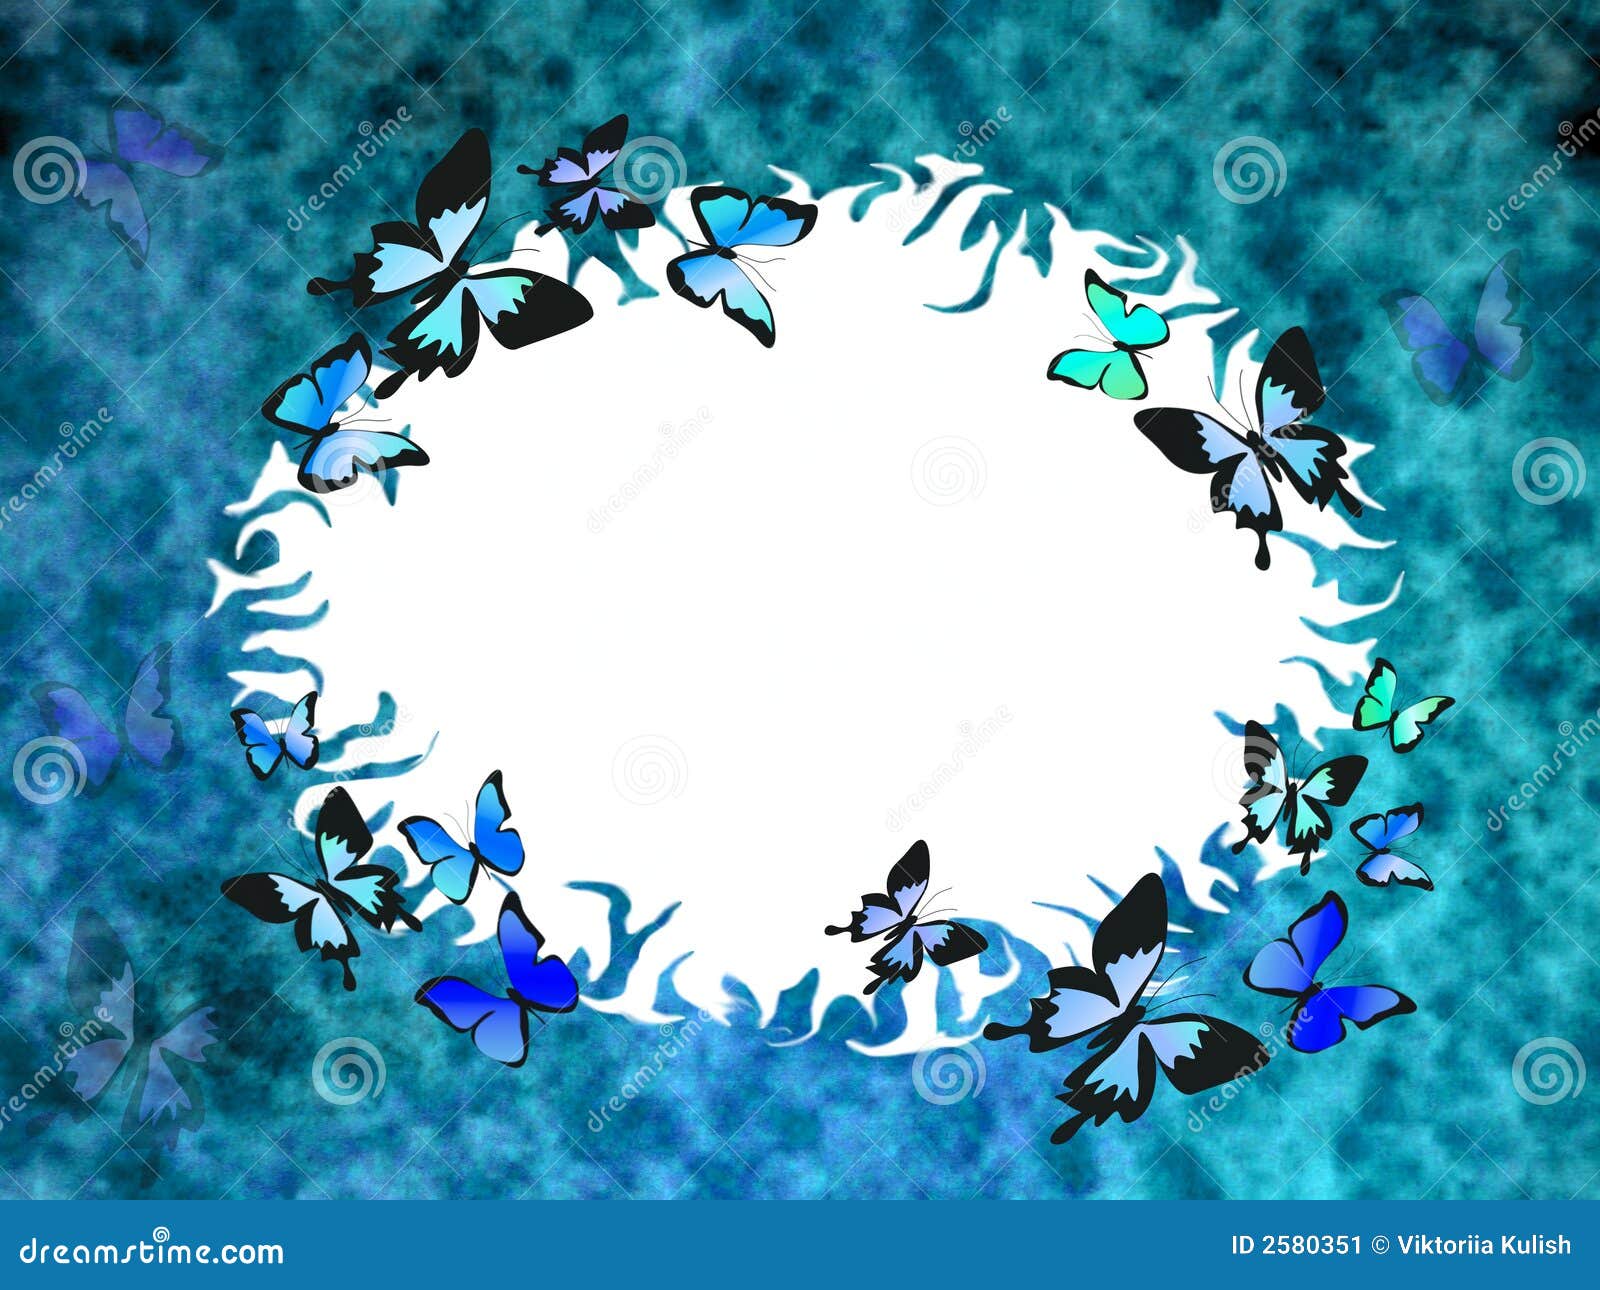 Blue grunge border stock illustration. Illustration of flutter - 2580351